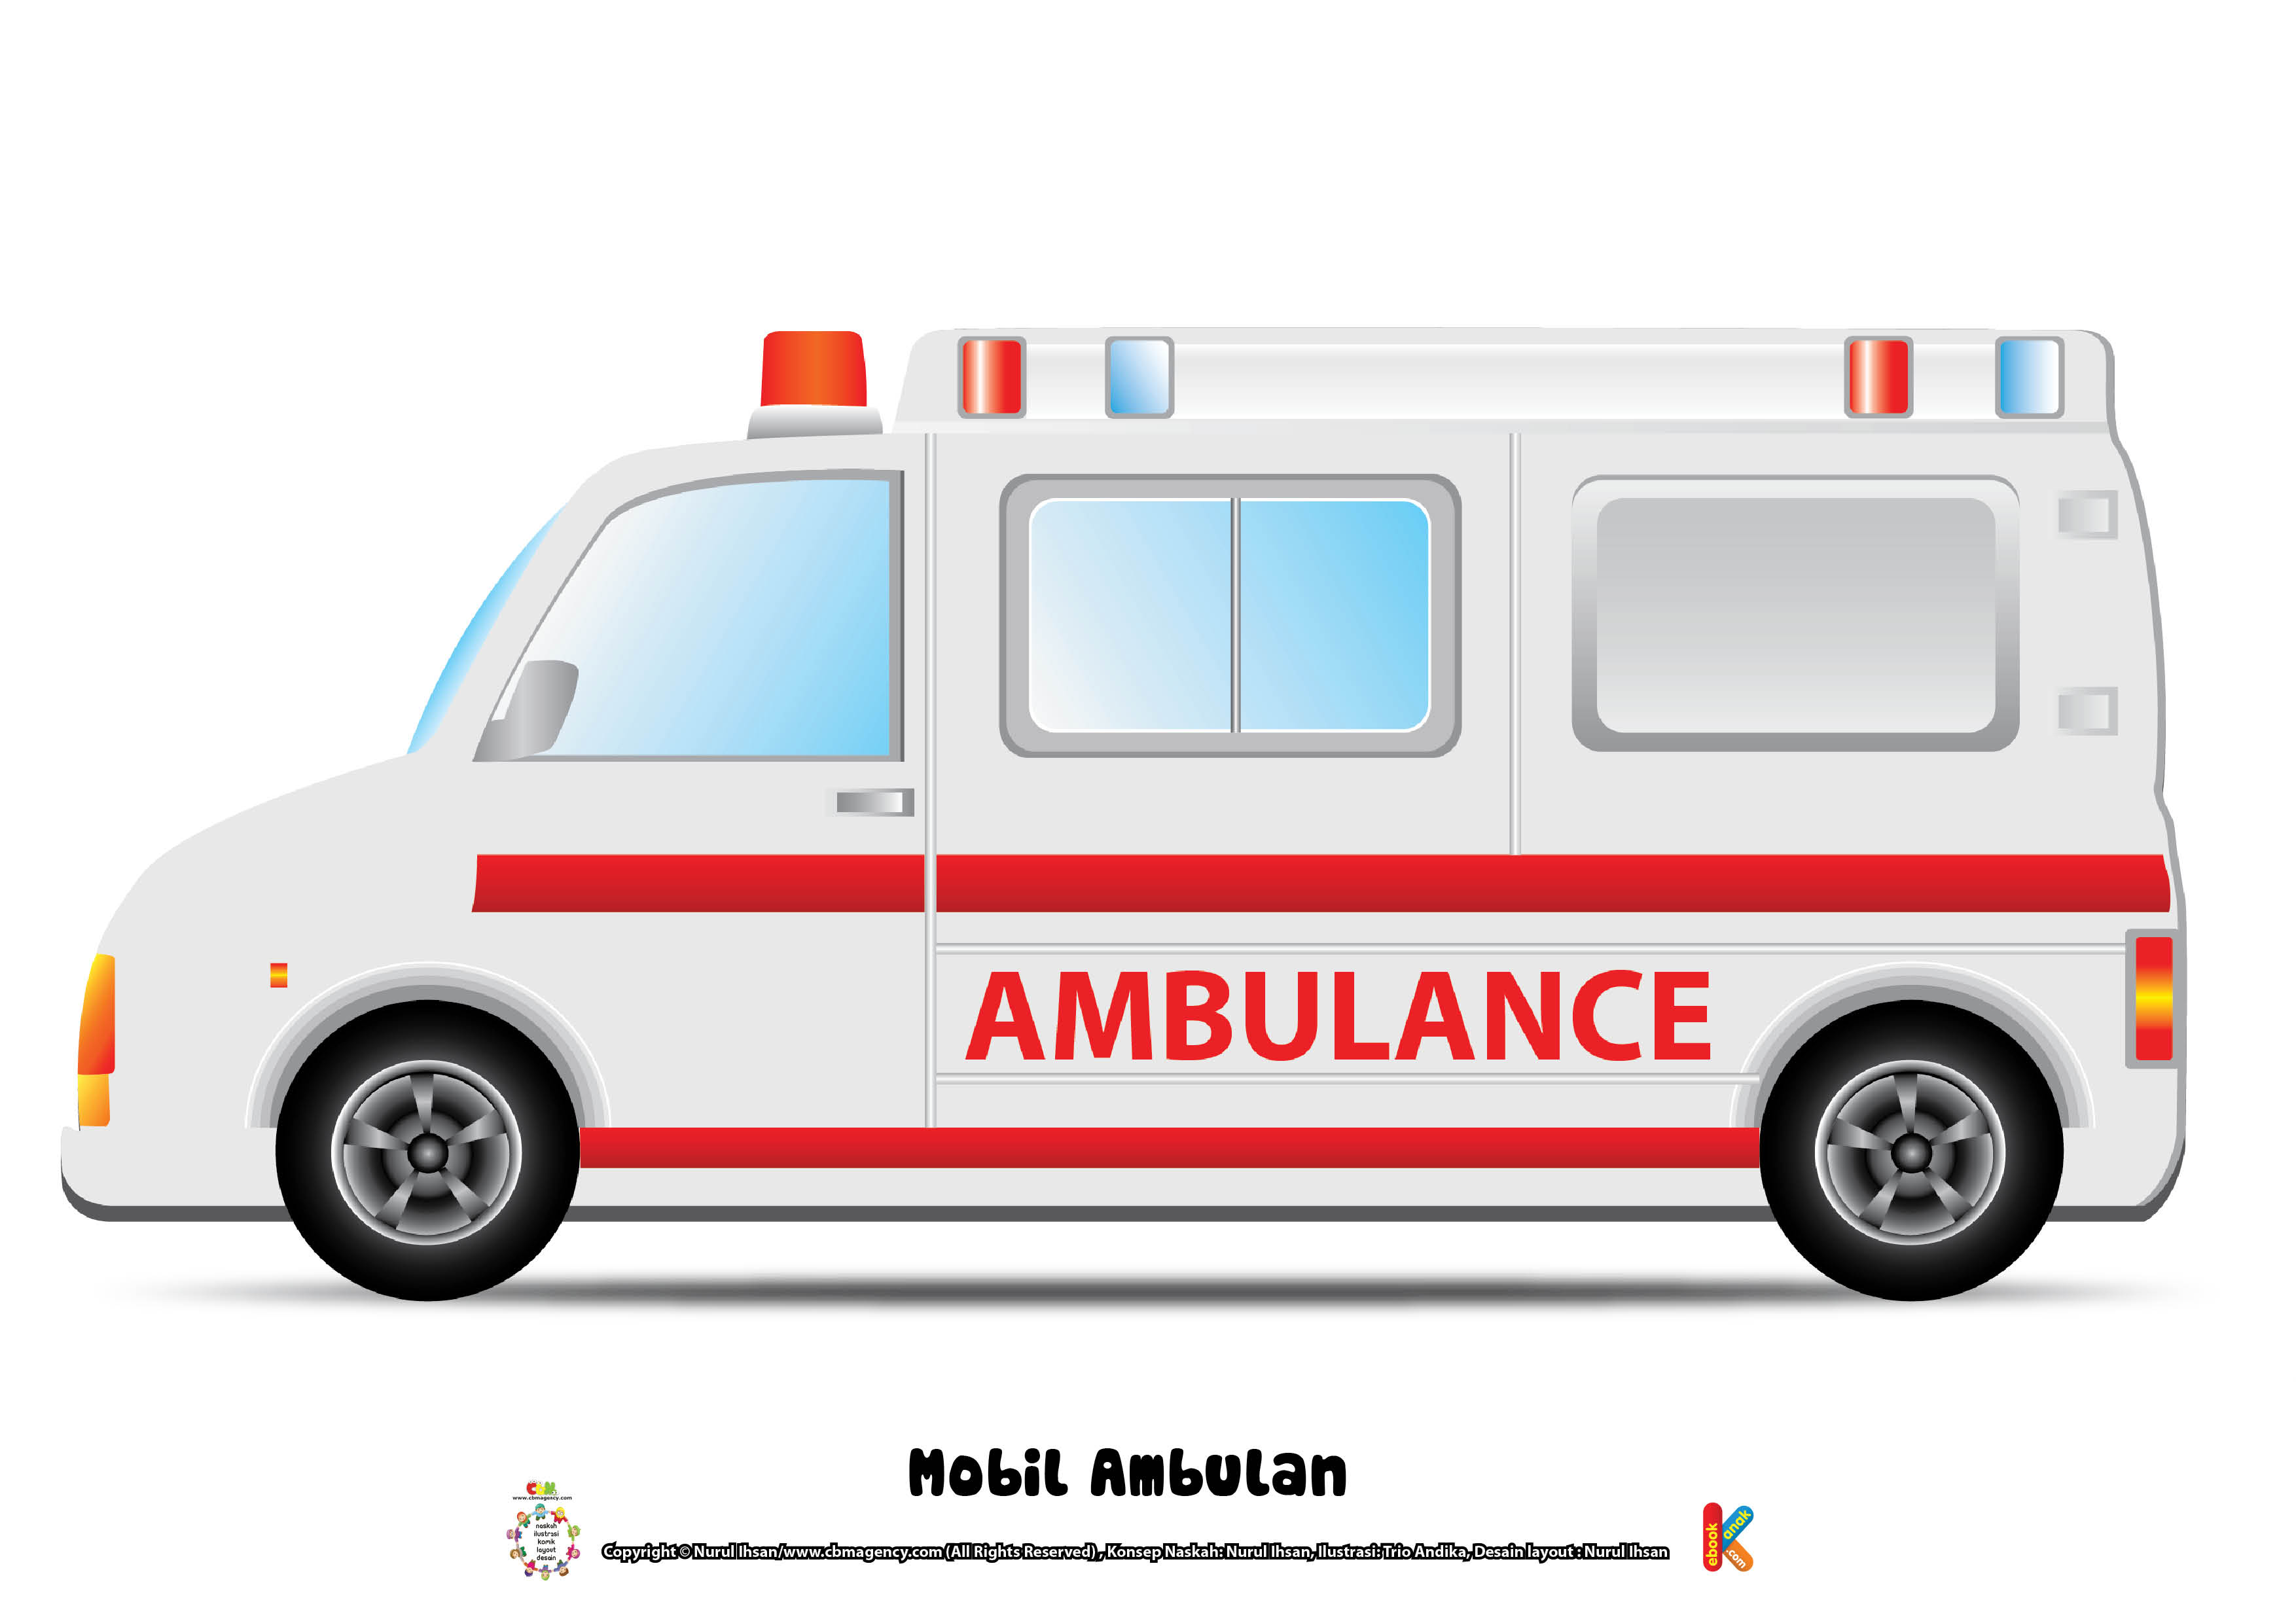 Kapan Mobil Ambulans Pertamakali Dikenal Ebook Anak